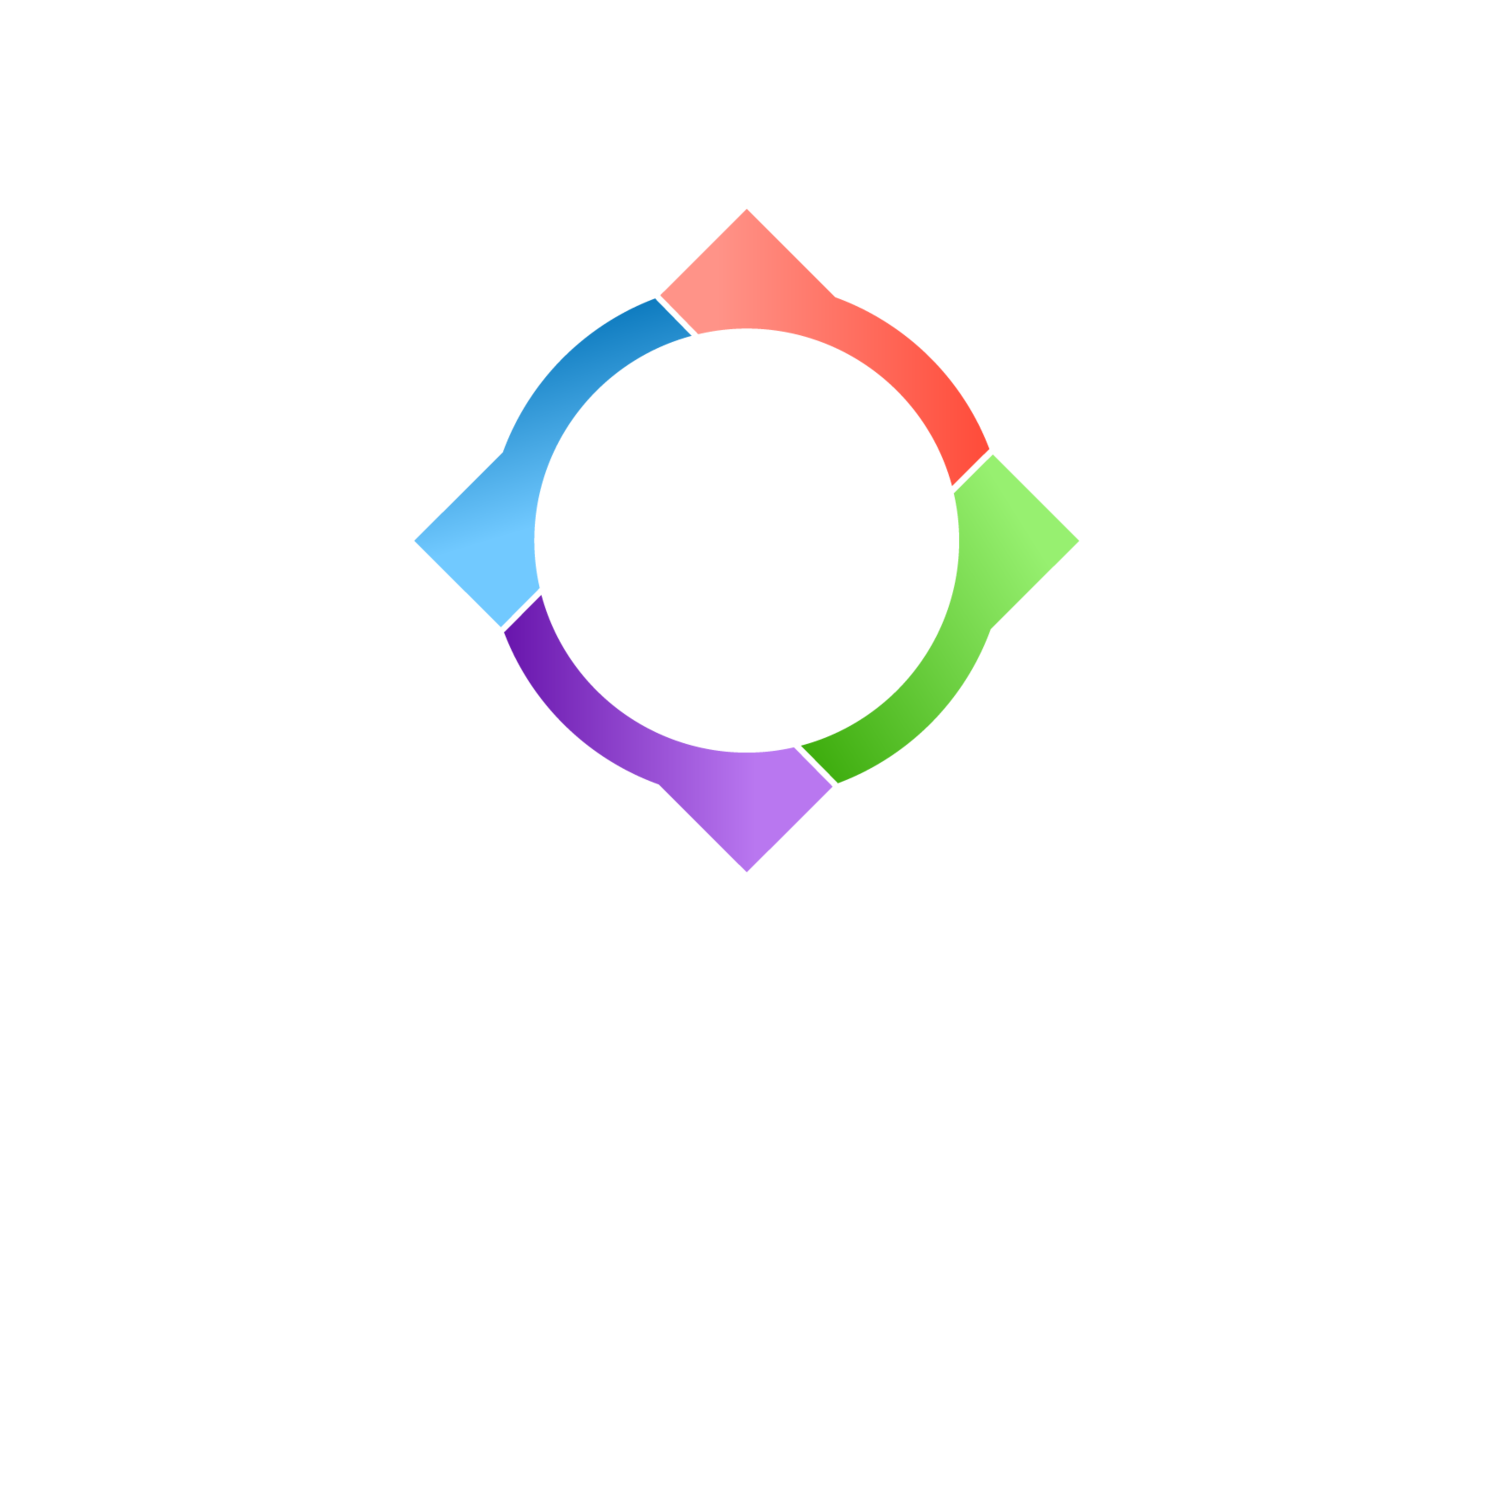 Northern Christian Alliance